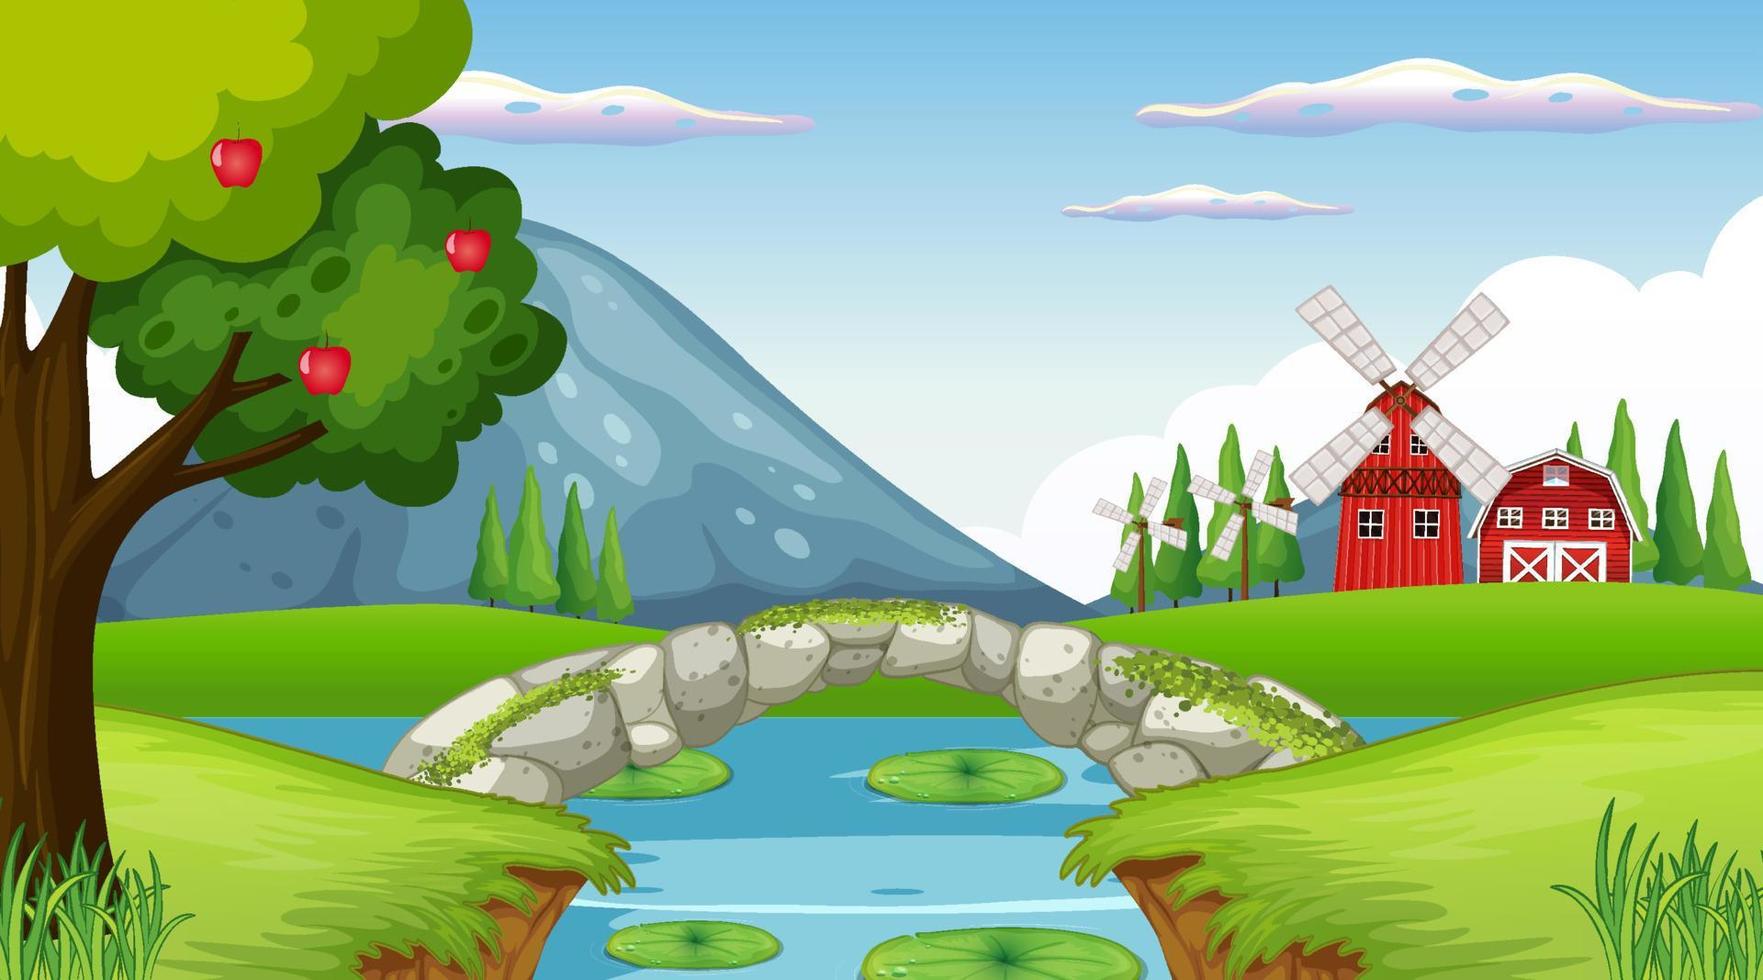 Farm background with stone bridge vector